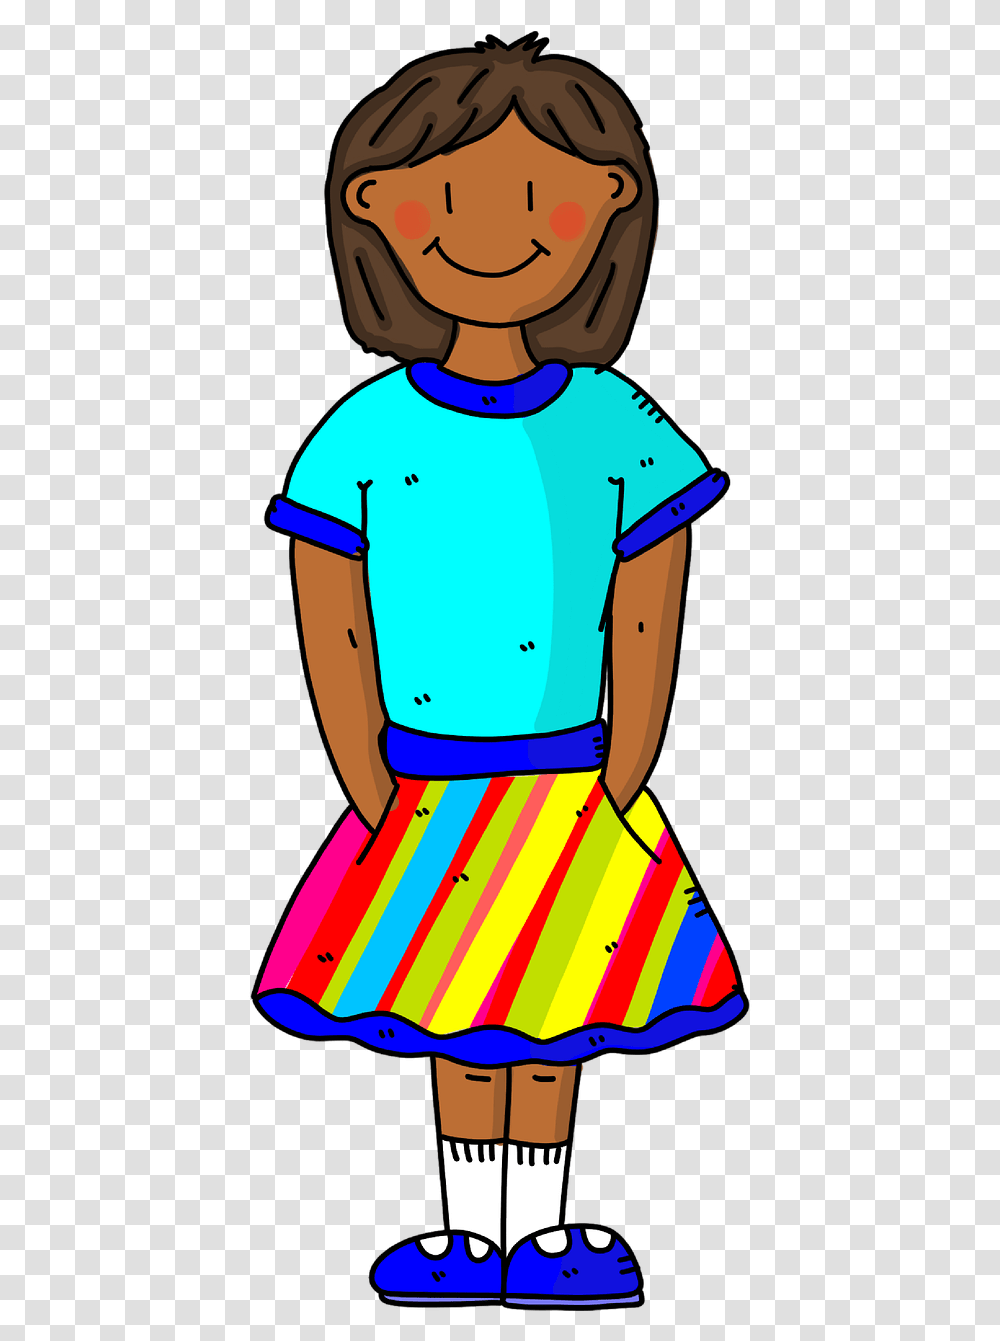 Girl Party Birthday Free Image On Pixabay Cartoon, Clothing, Shirt, Helmet, Plot Transparent Png